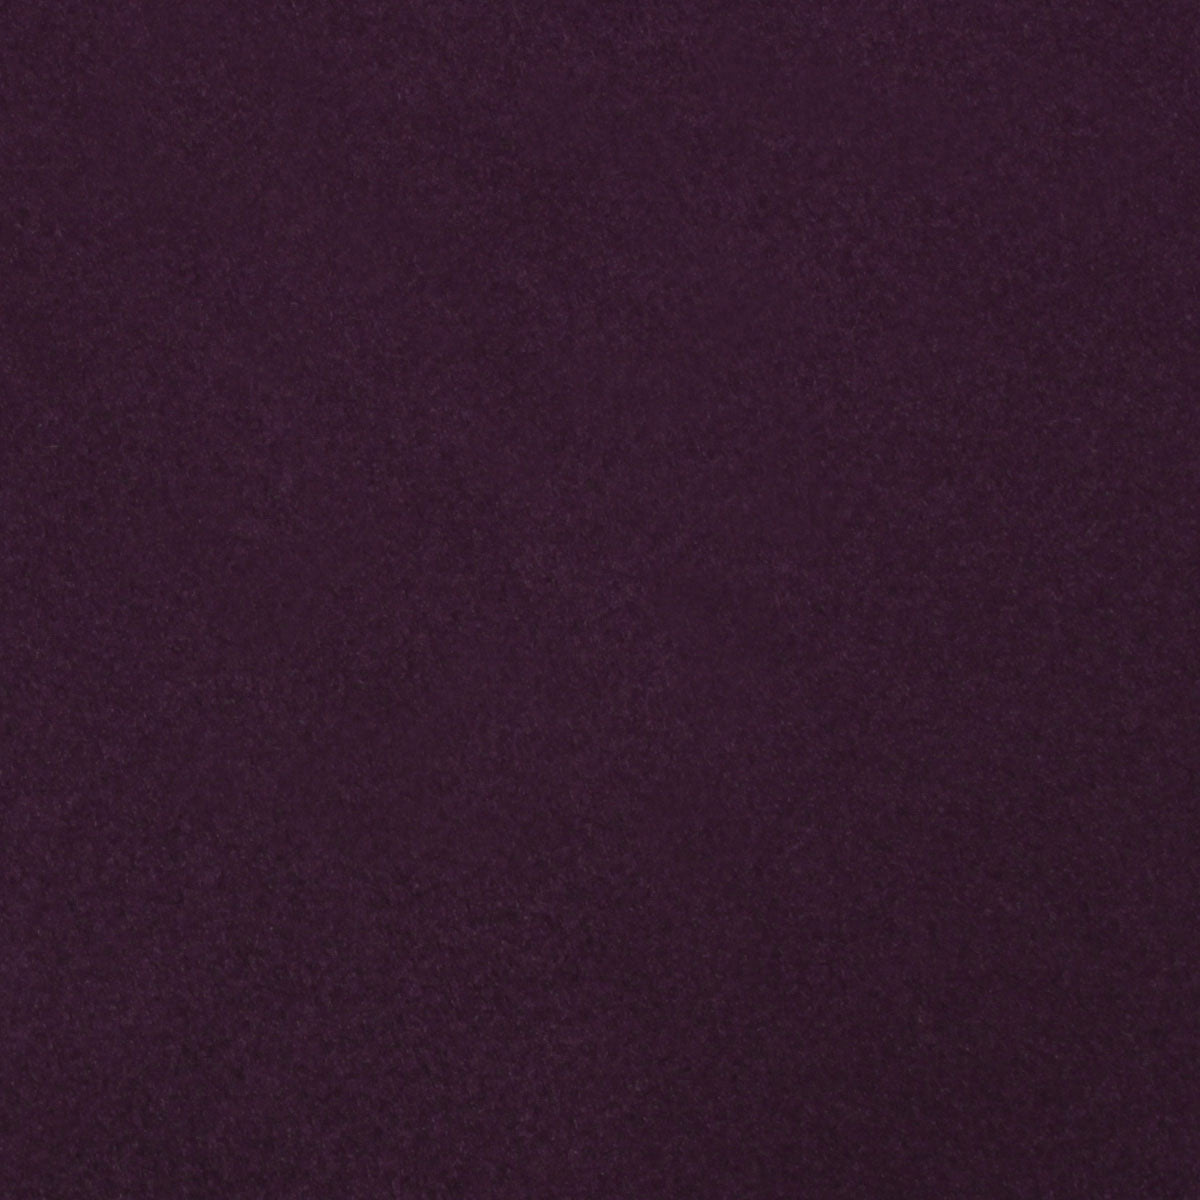 Plum Purple Velvet Fabric Pocket Square